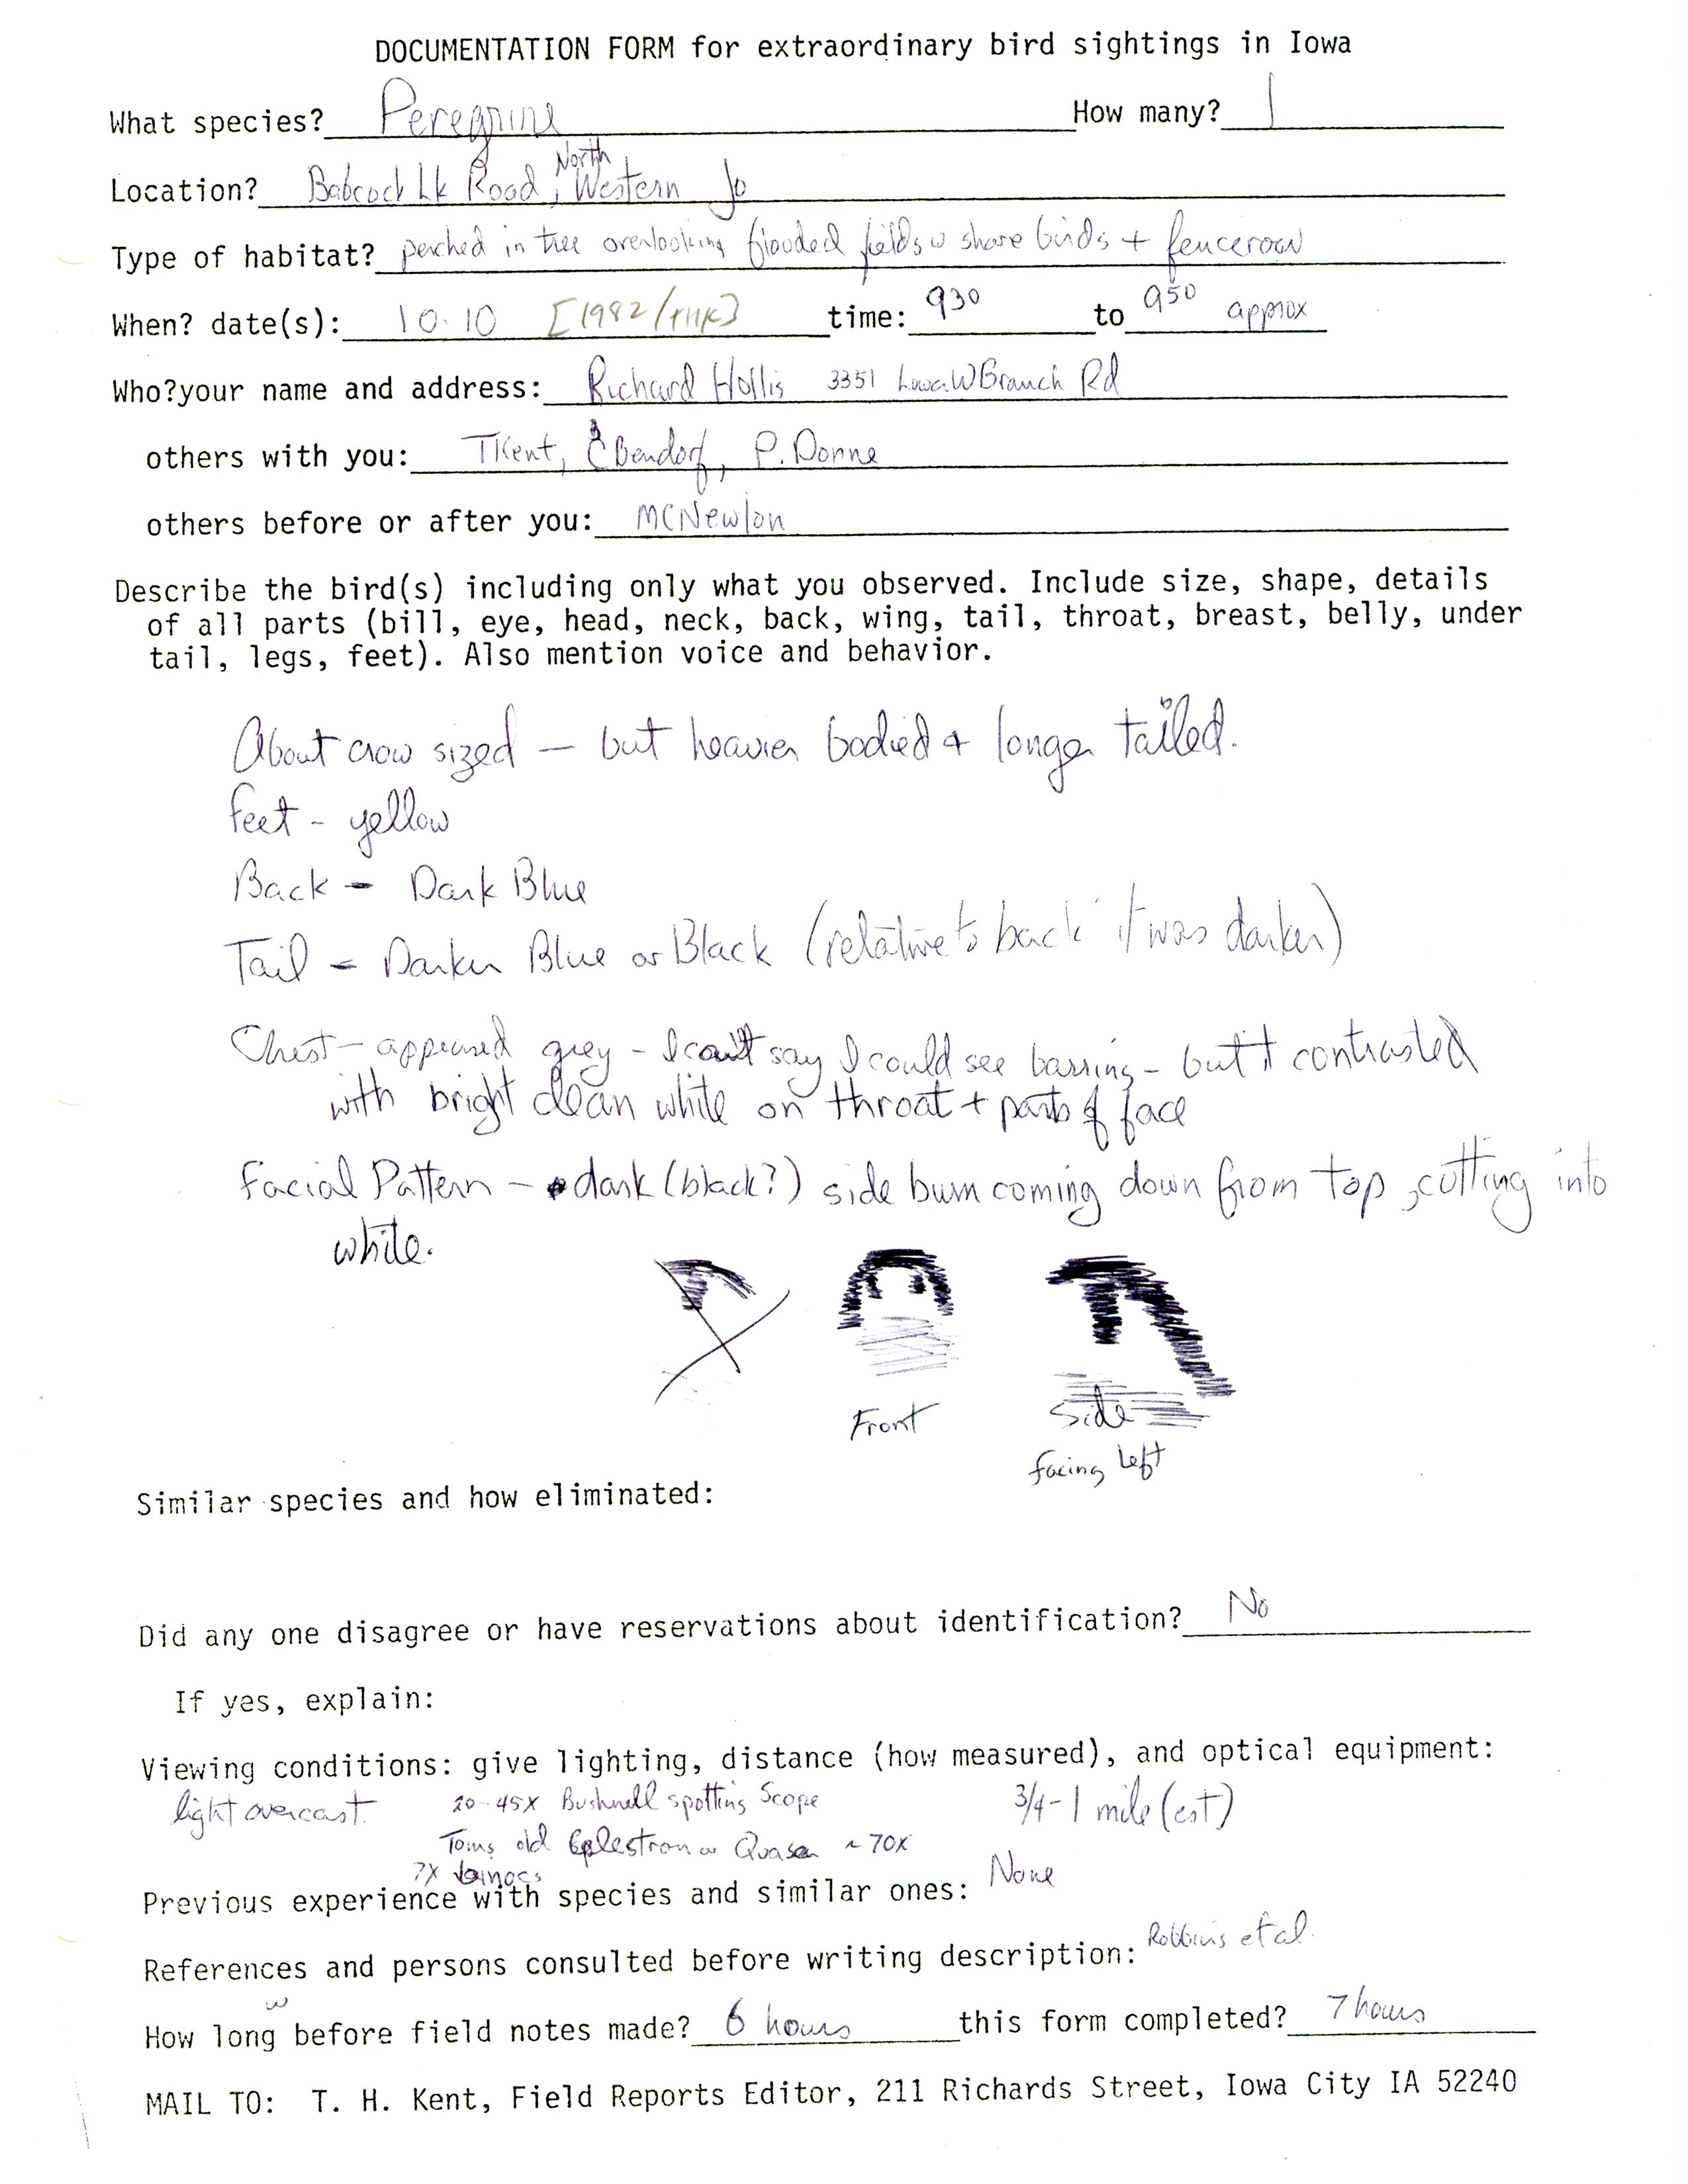 Rare bird documentation form for Peregrine Falcon at Babcock Access, 1982